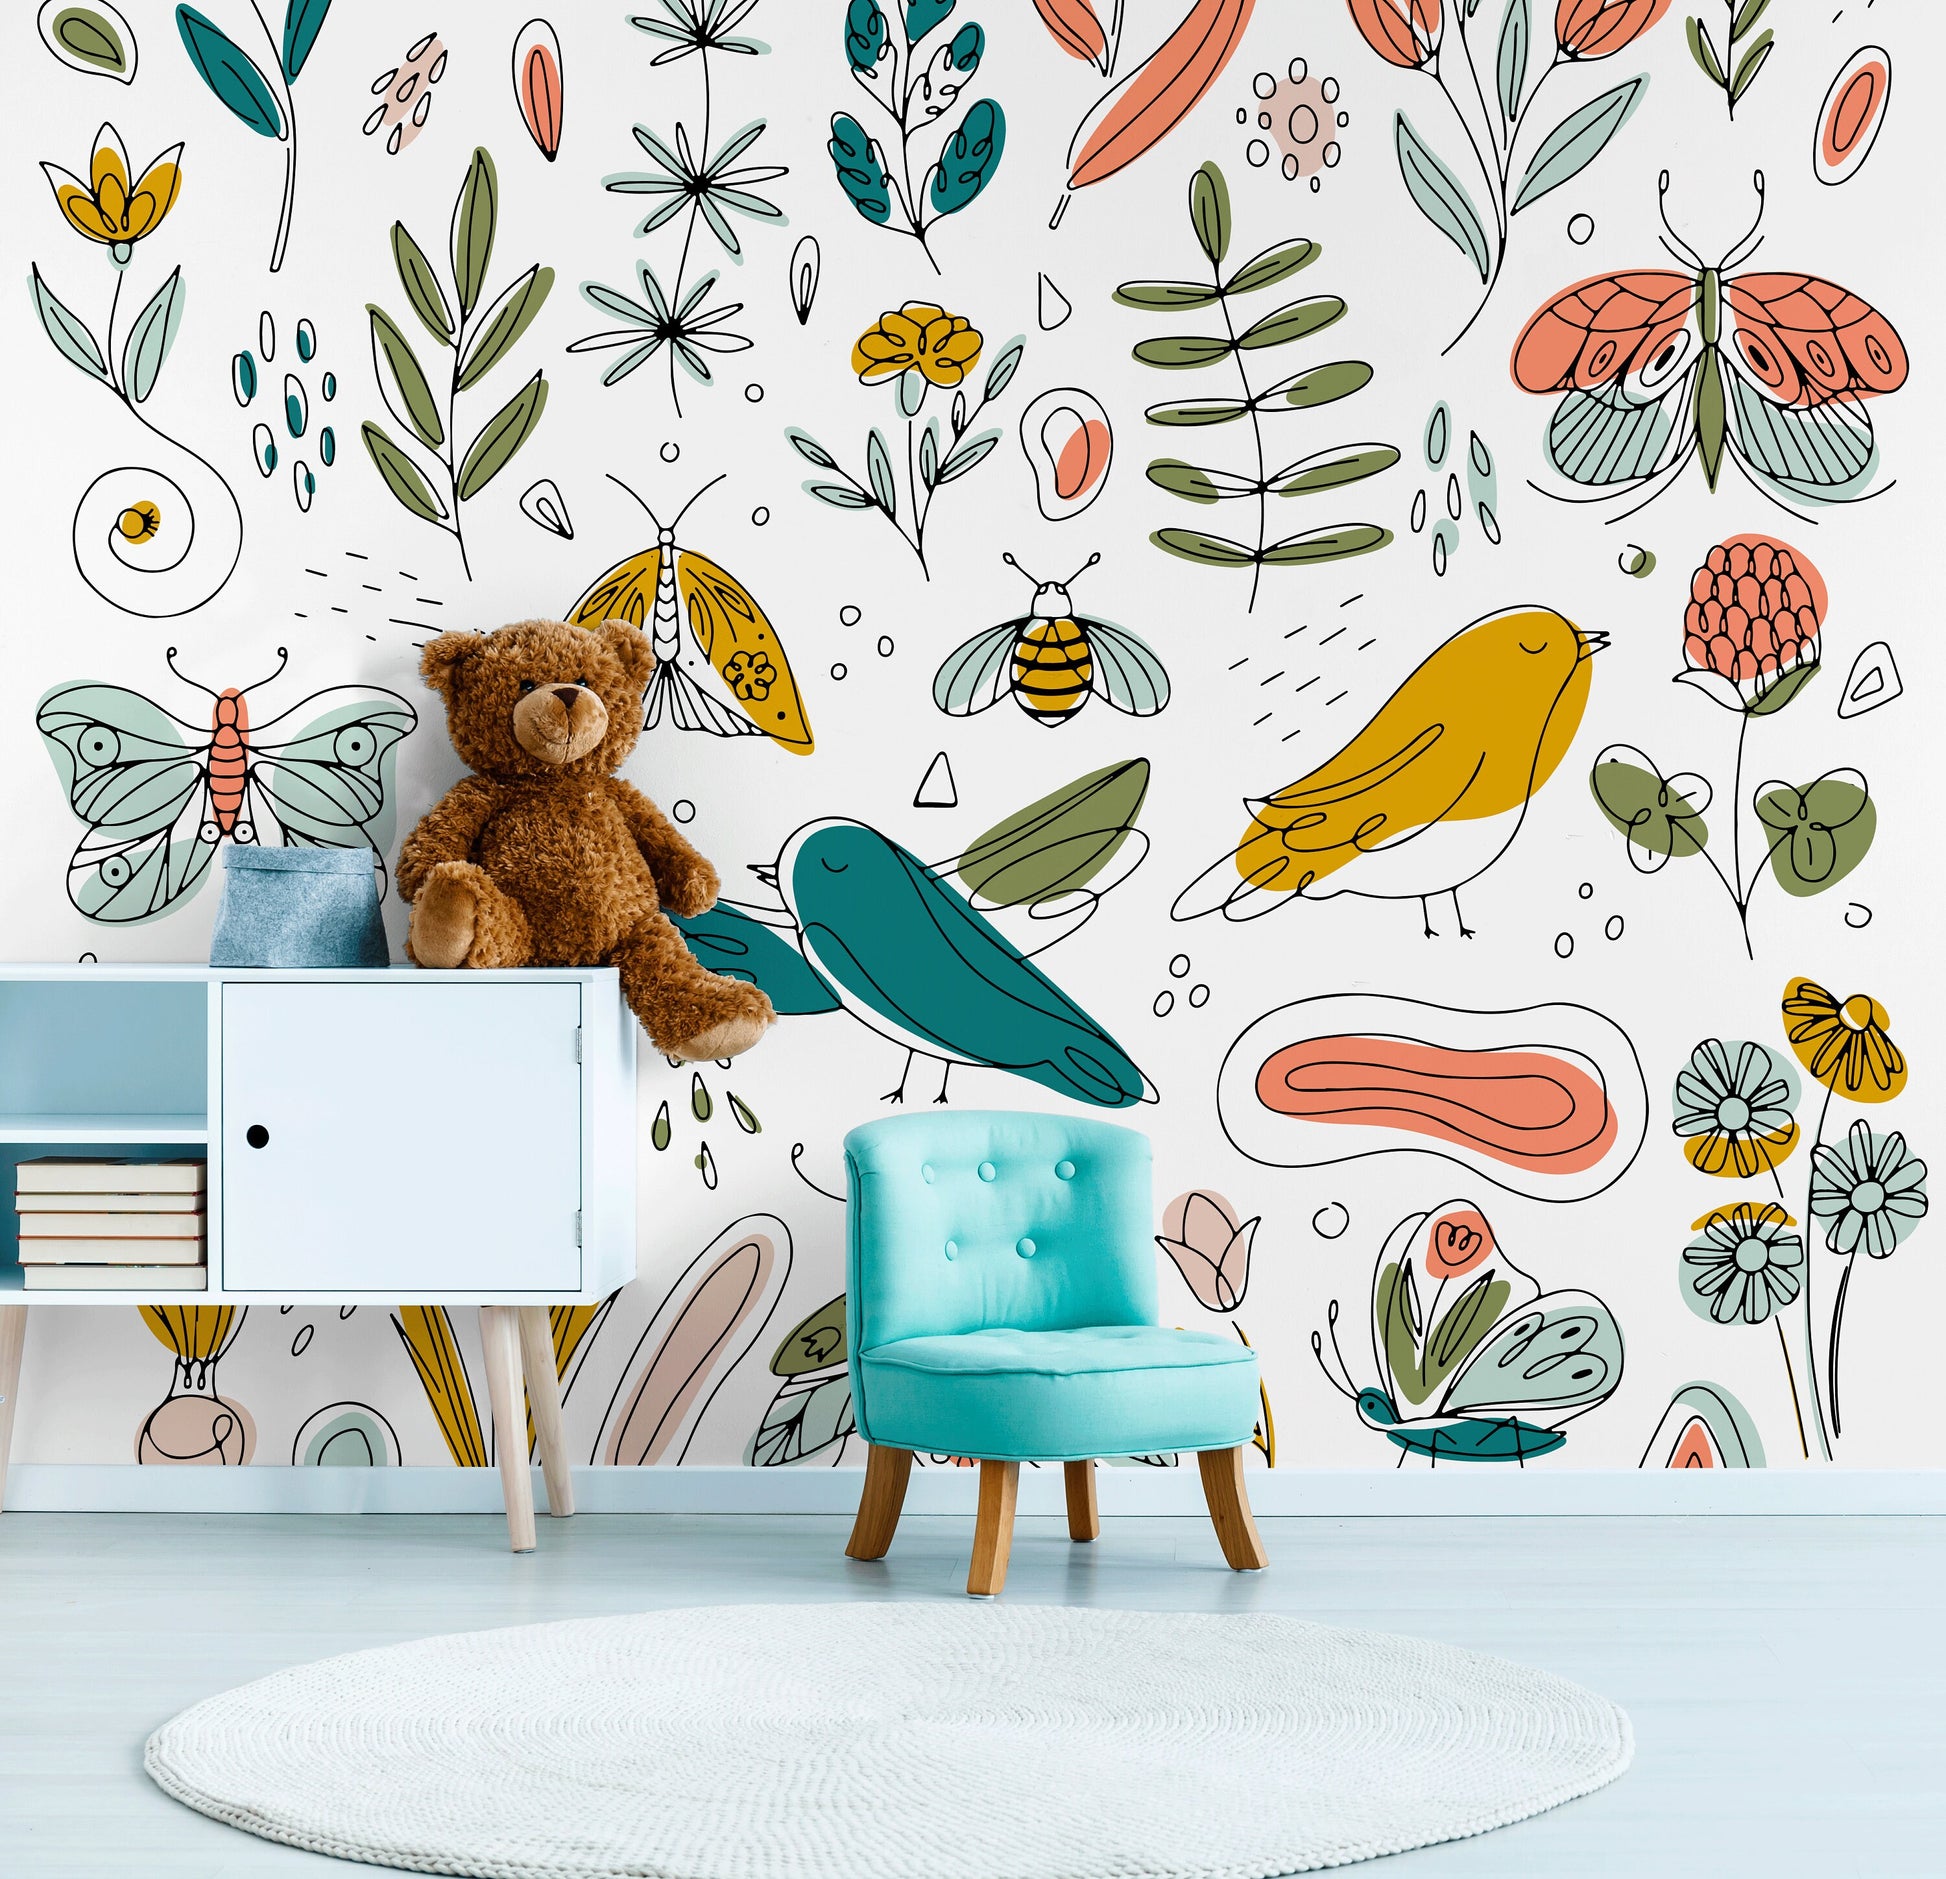 Garden Illustration Removable Wallpaper Home Decor Wall Art Room Decor / Cute Floral and Butterflies Wallpaper - B982